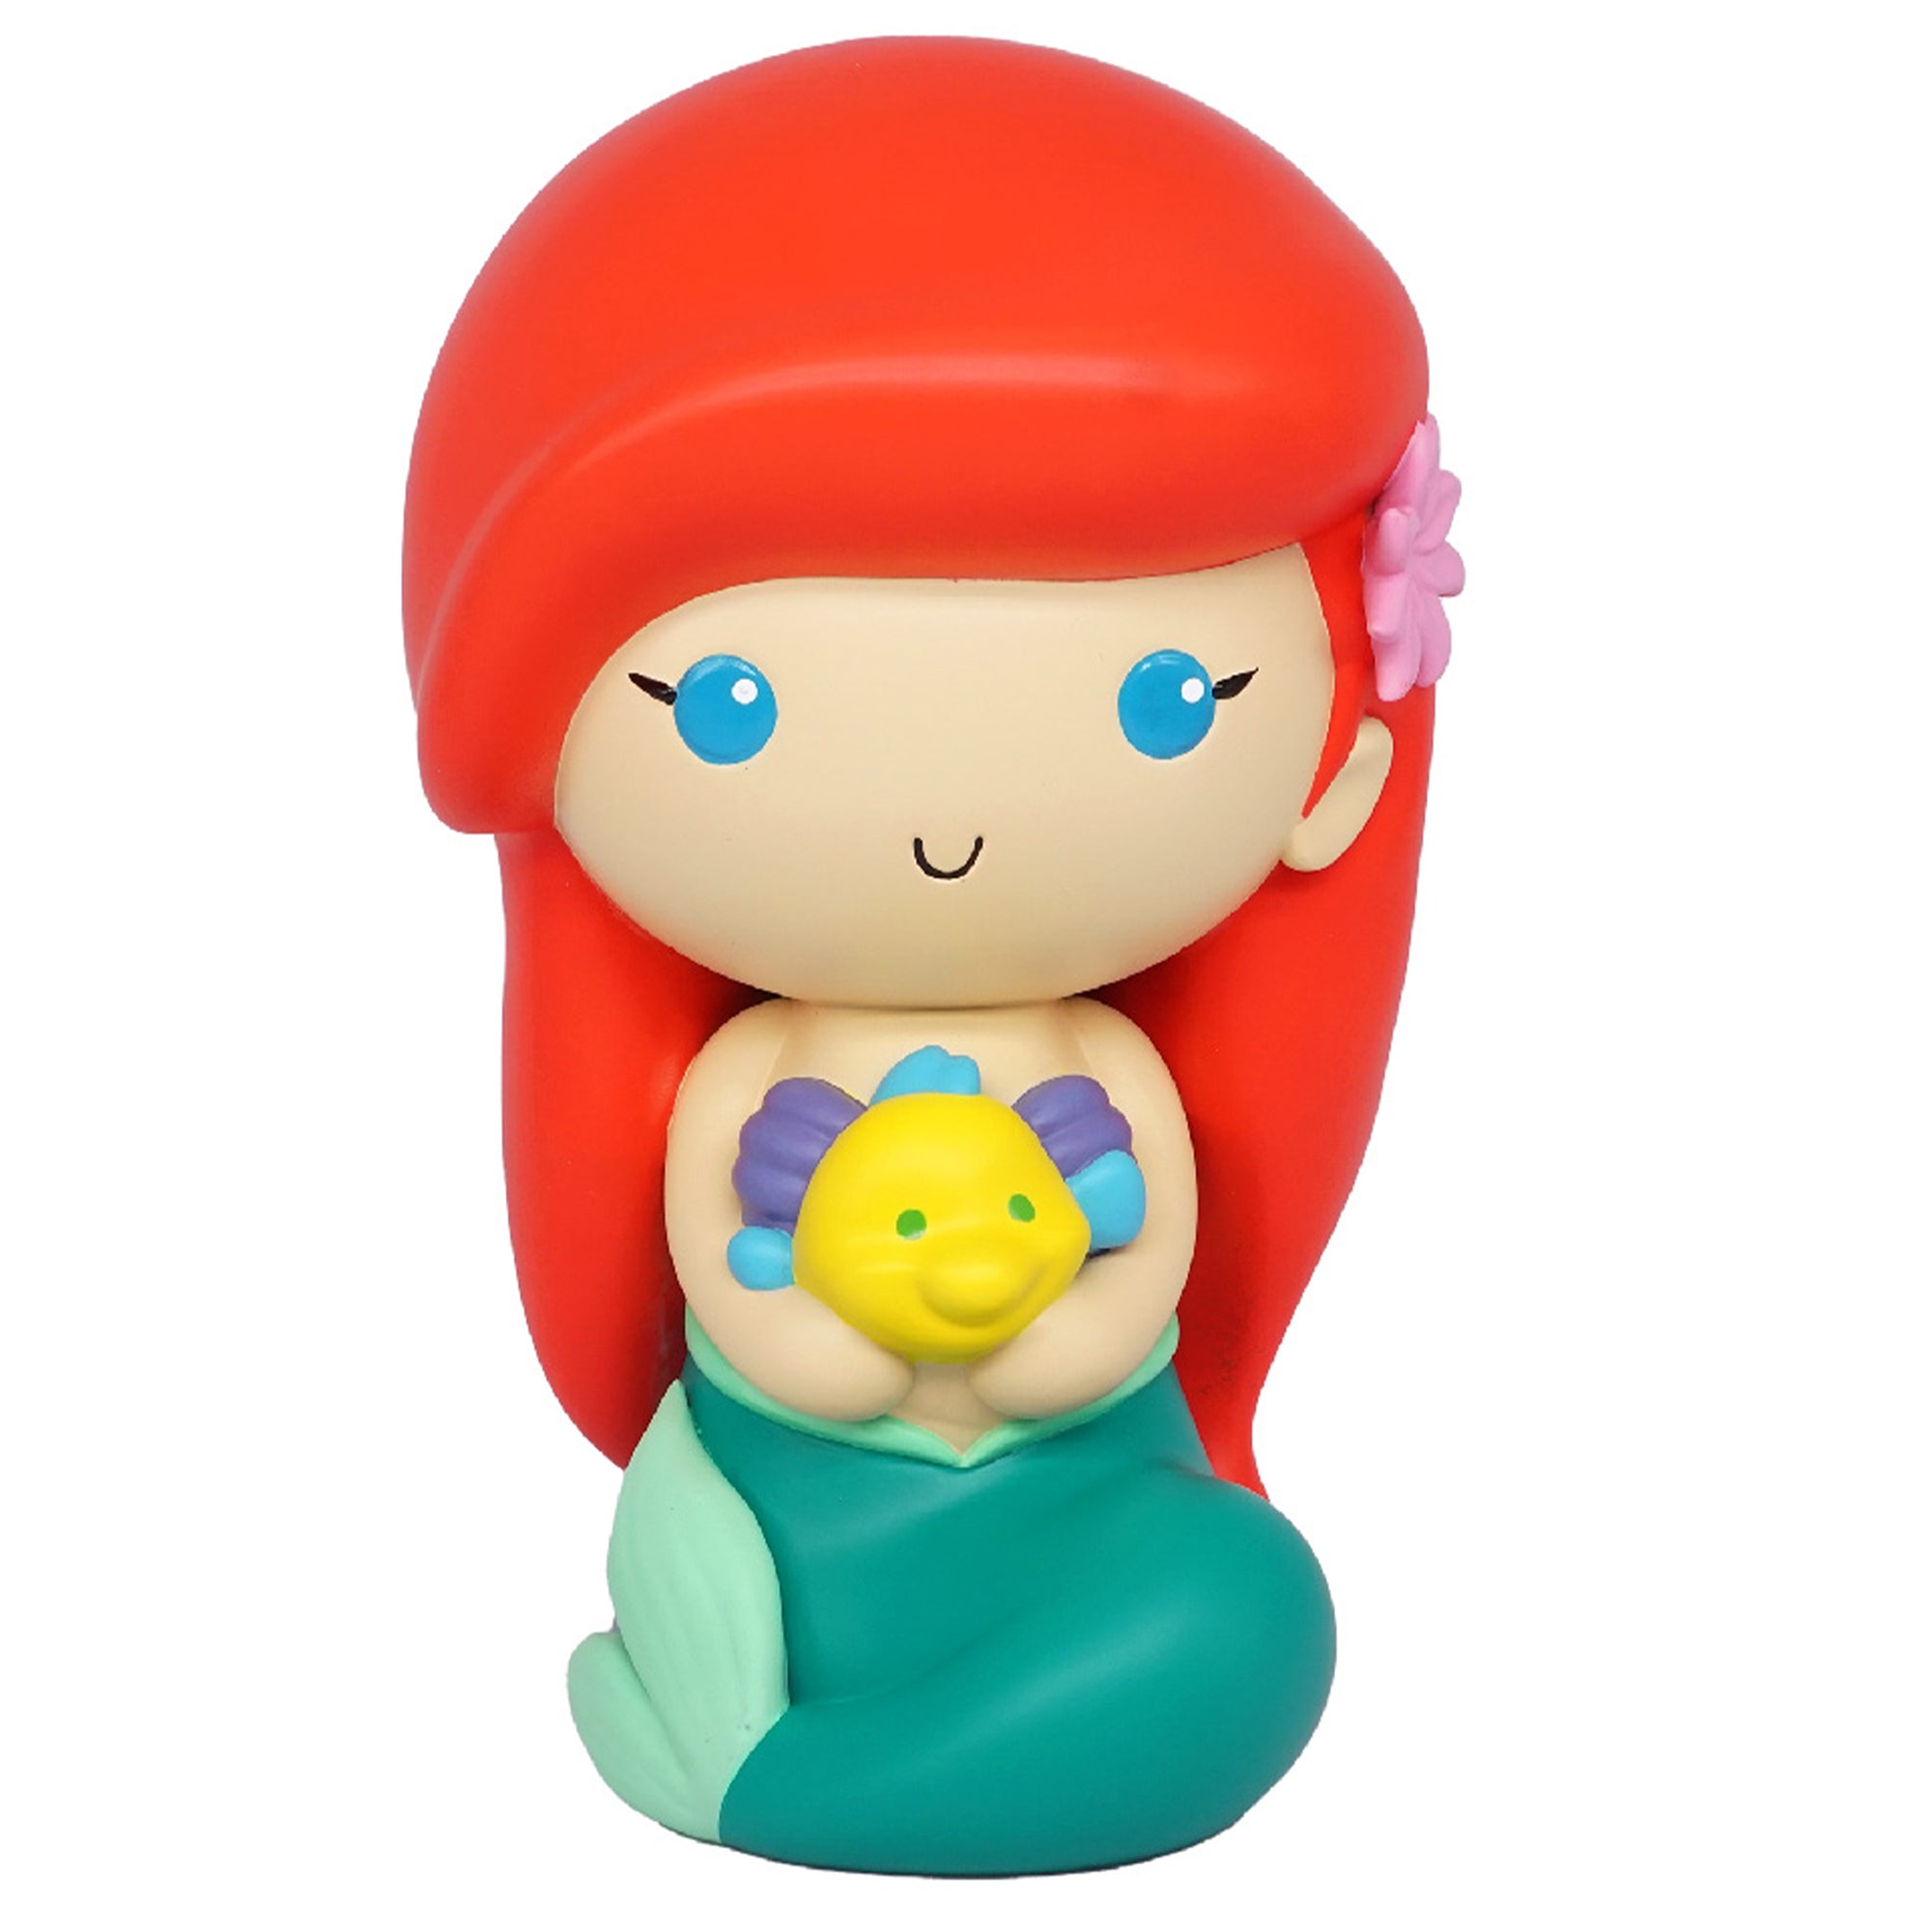 Disney Princess Ariel Figural Display Bank